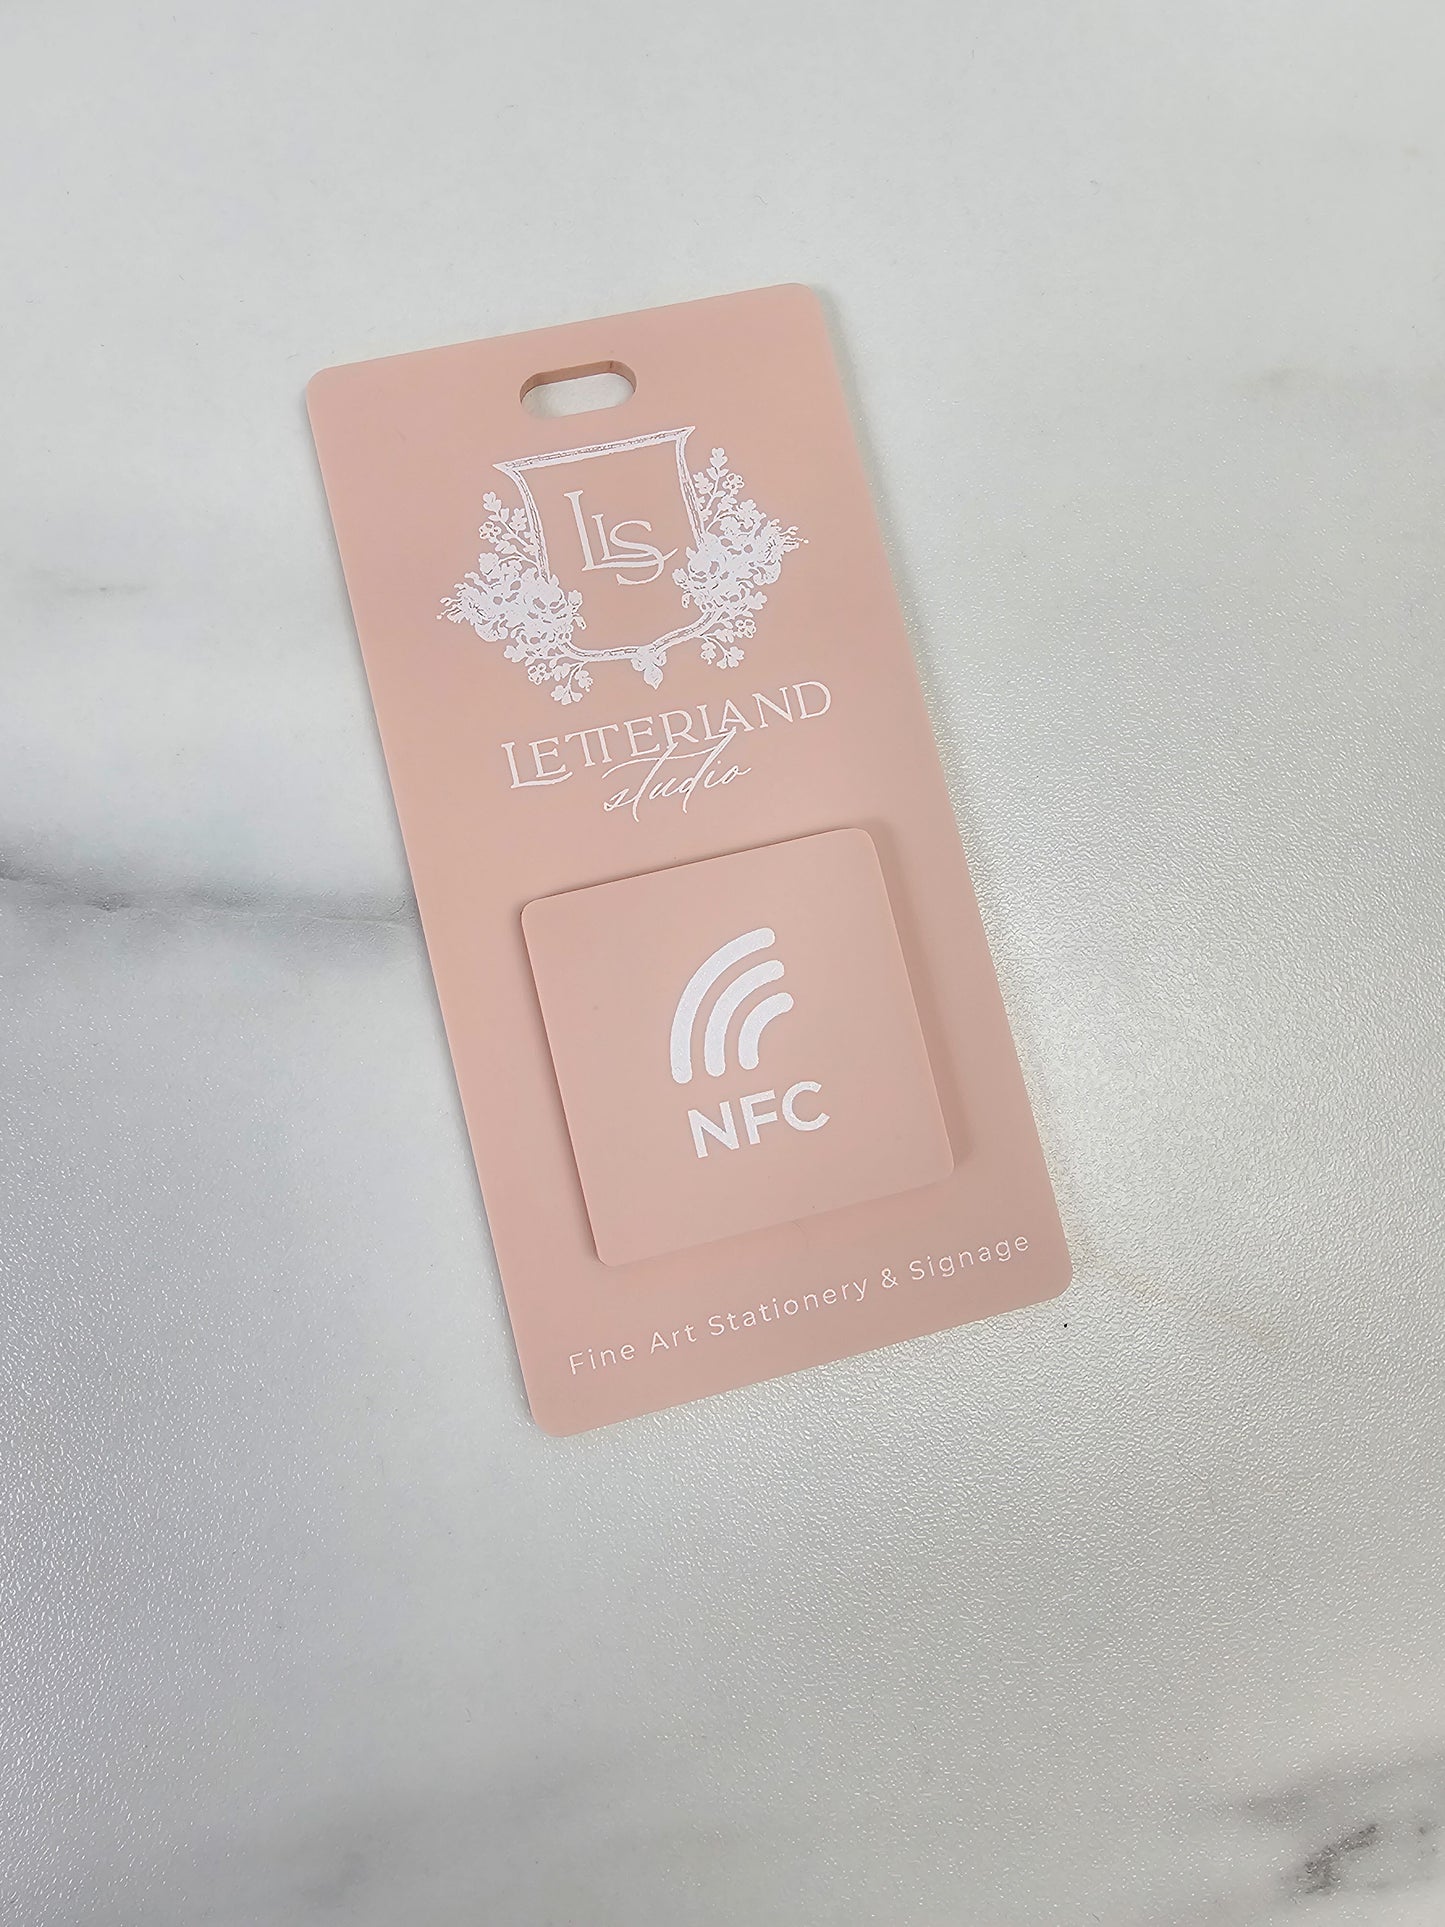 Tradeshow NFC Badges